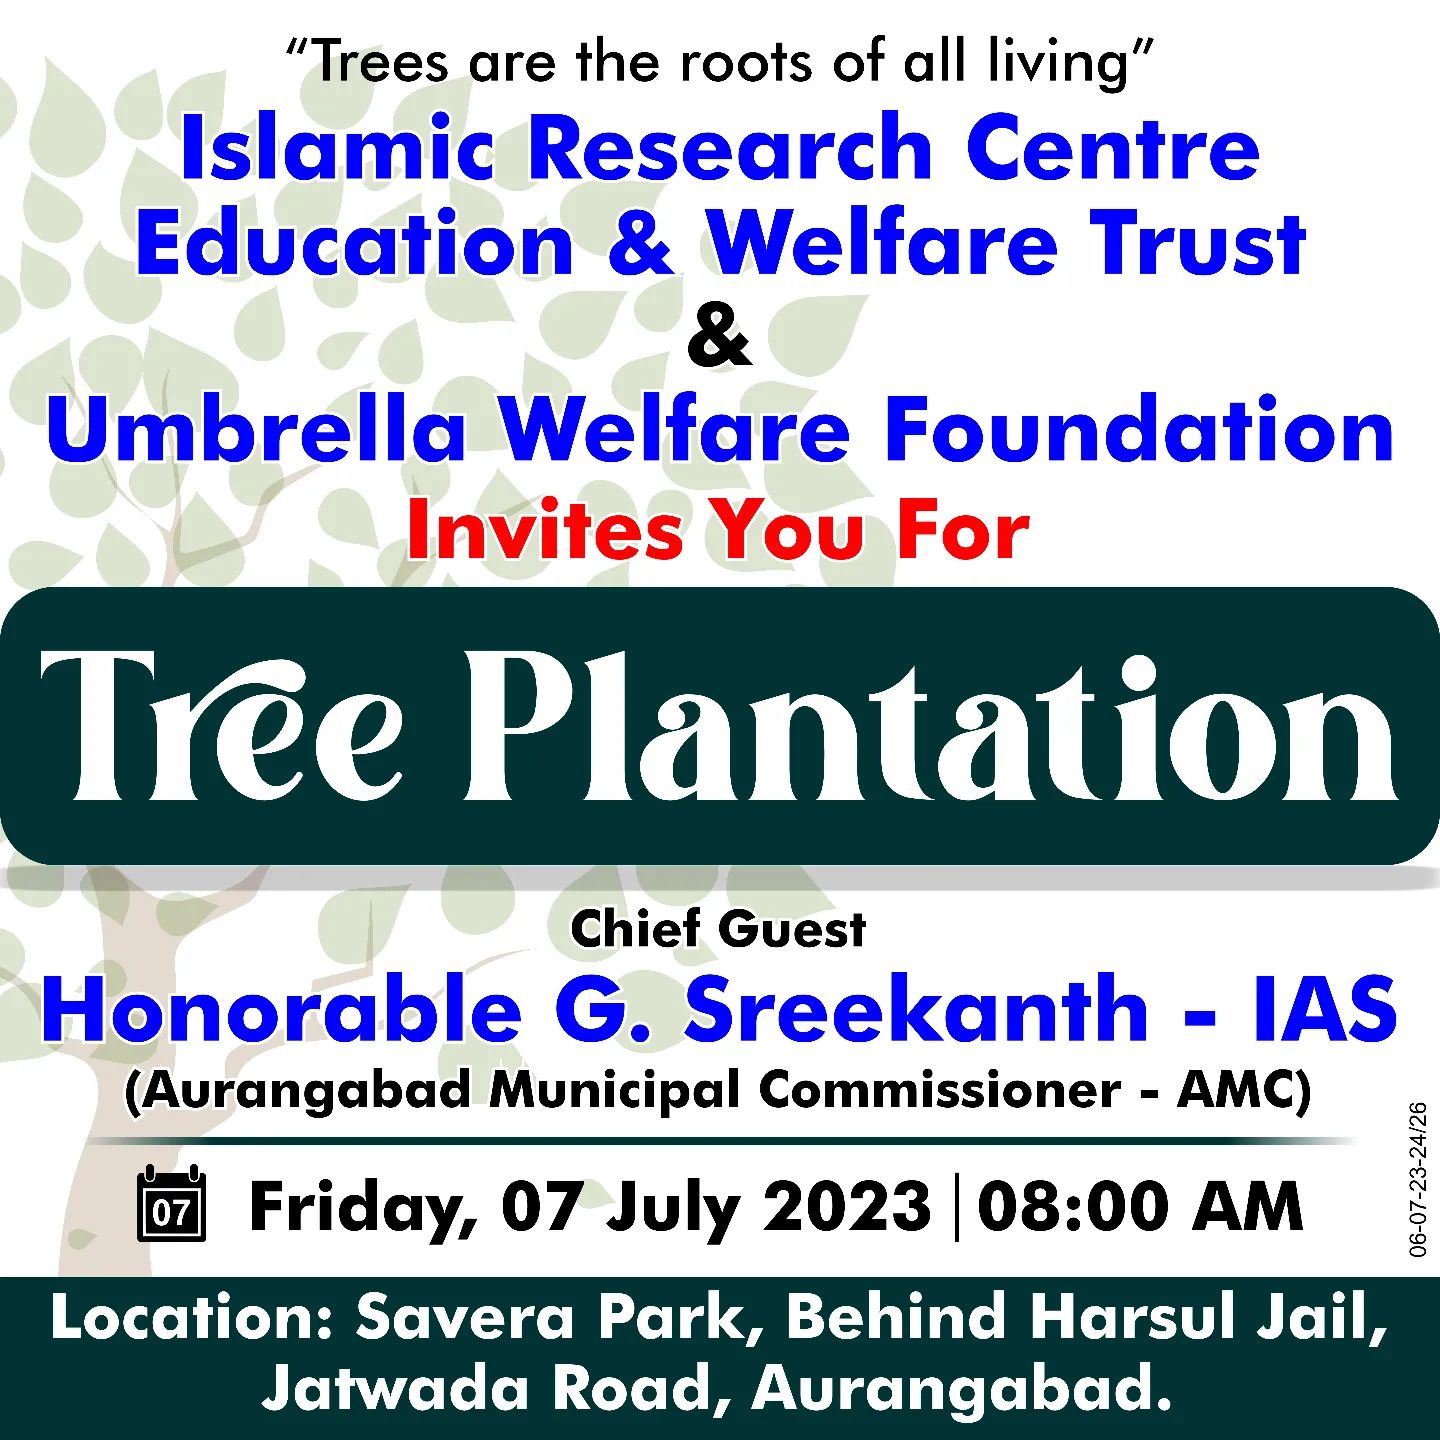 We Invites You For Tree Plantation